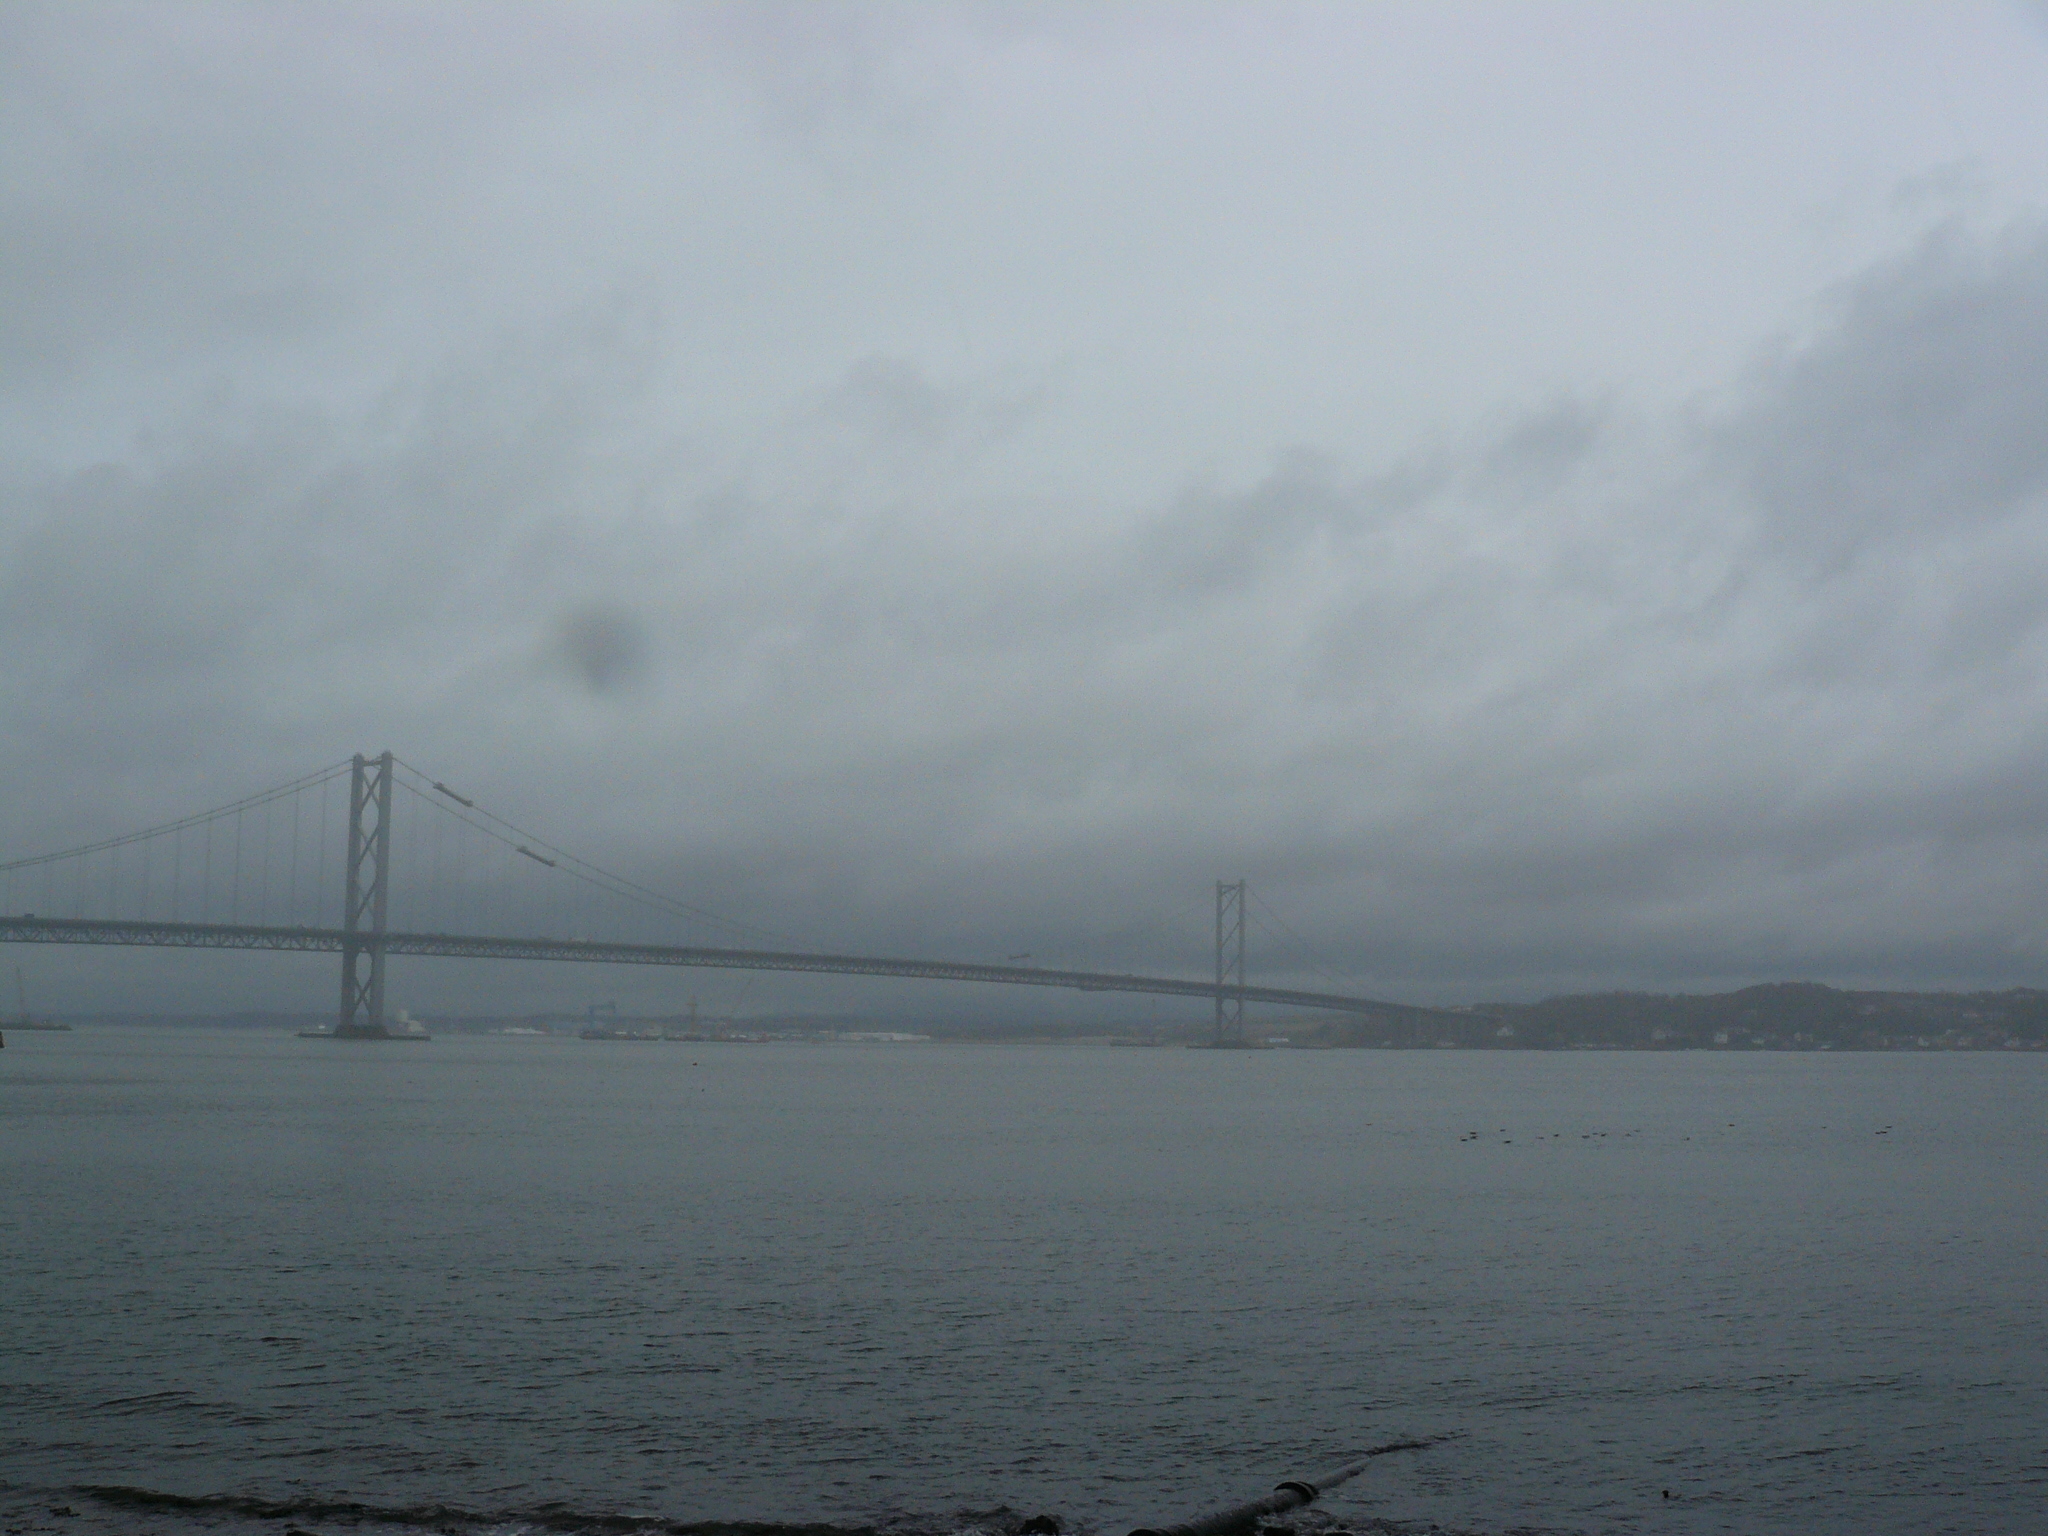 Bridges across the Firth of Forth (Scotland) - My, Great Britain, Scotland, Bridge, Strait, Travels, sights, 